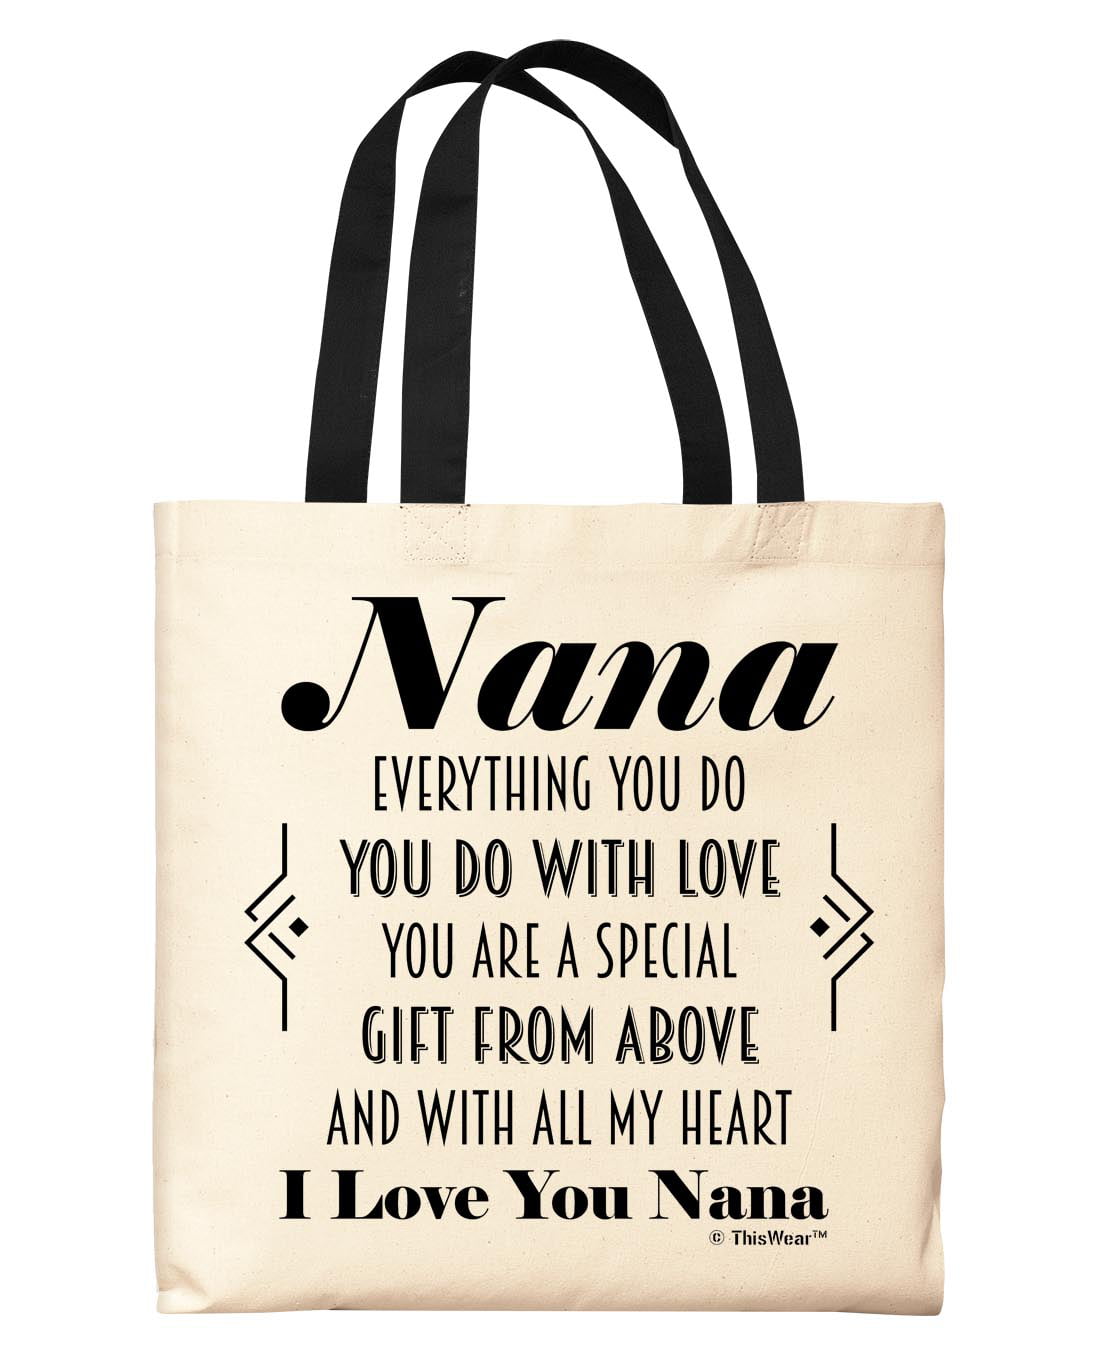 Custom Tote Bag Gift For Grandma - Tote Bag Design Gift Ideas - Best Nana  Gifts - Rocking The Nana Life Tote Bag